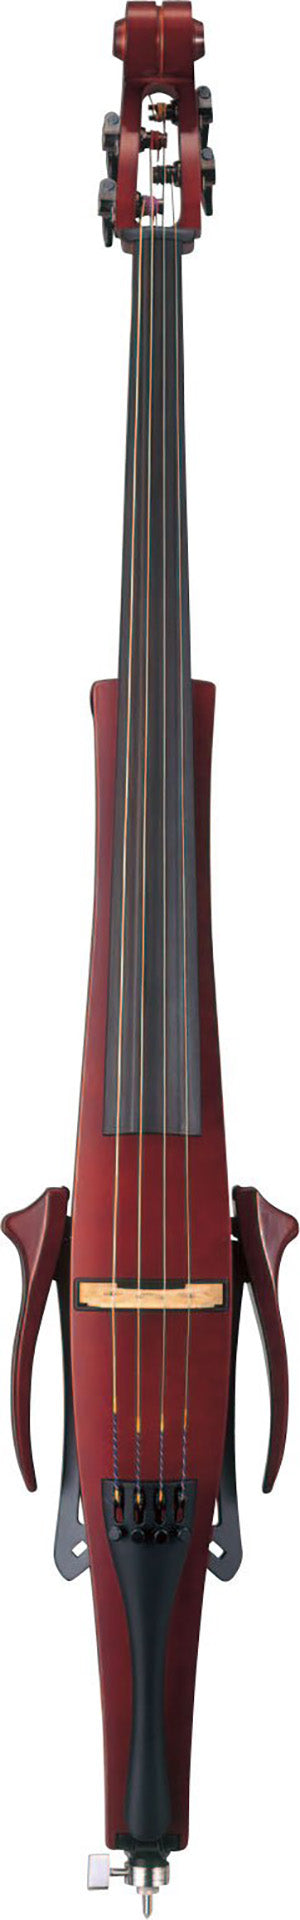 Yamaha Svc210sk Studio Acoustic Body Silent Compact Cello